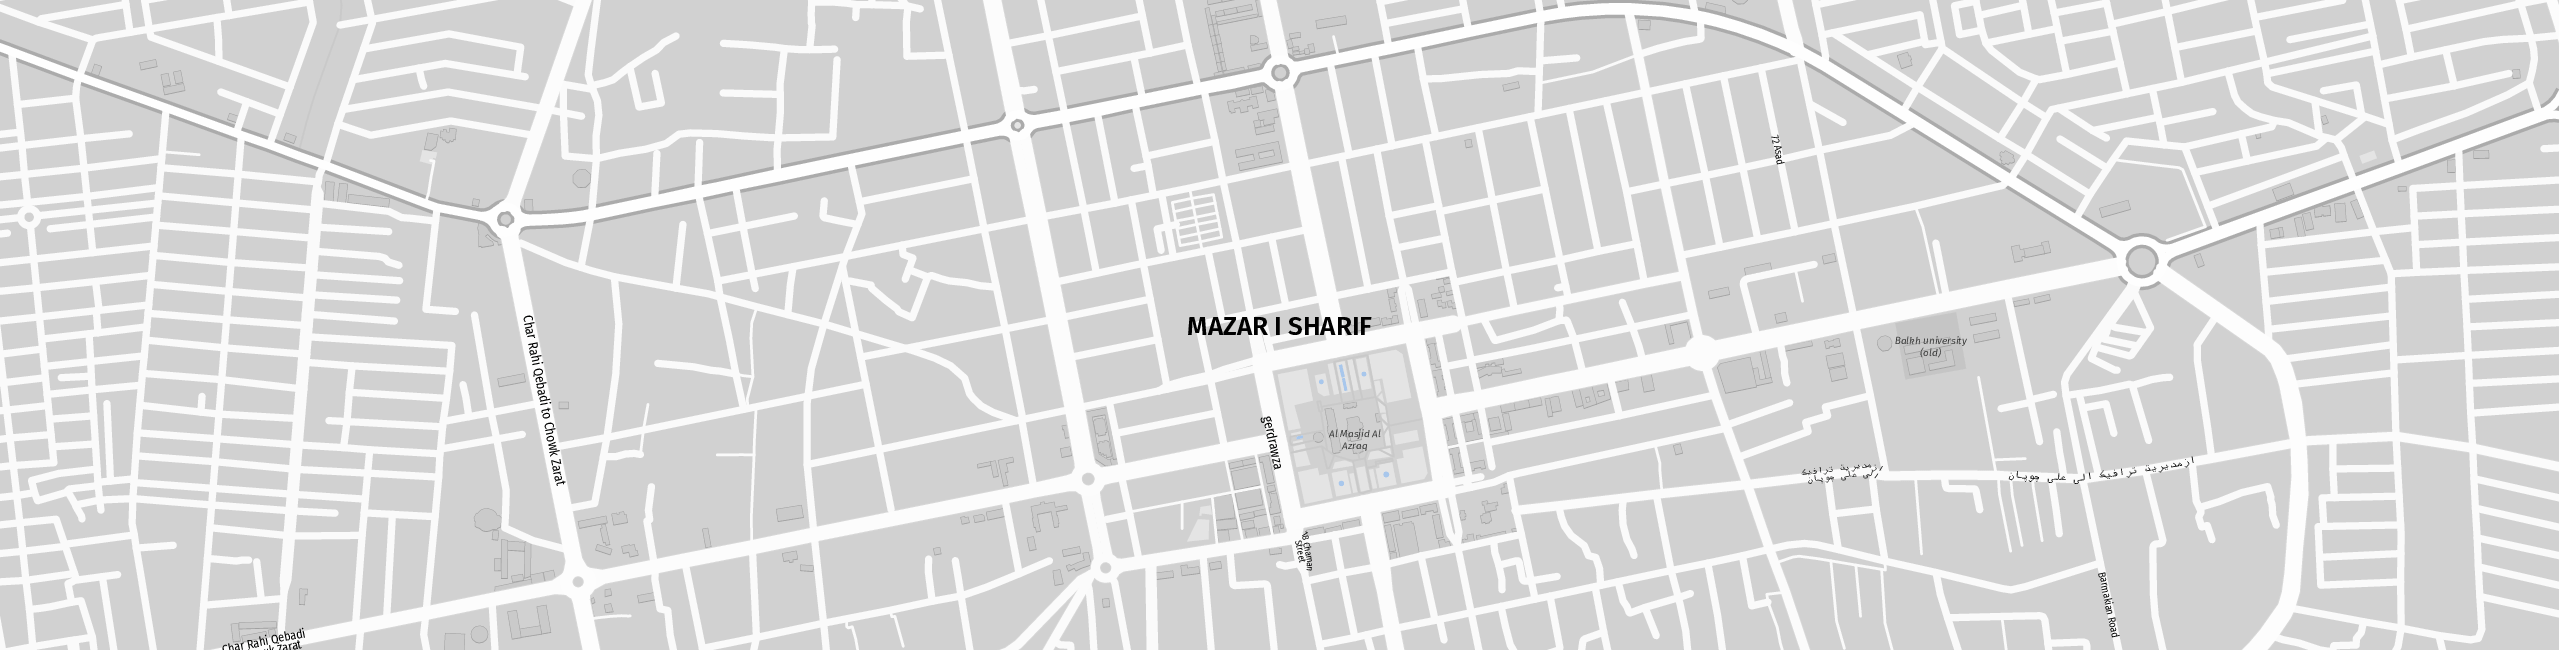 Stadtplan Mazari Sharif zum Downloaden.